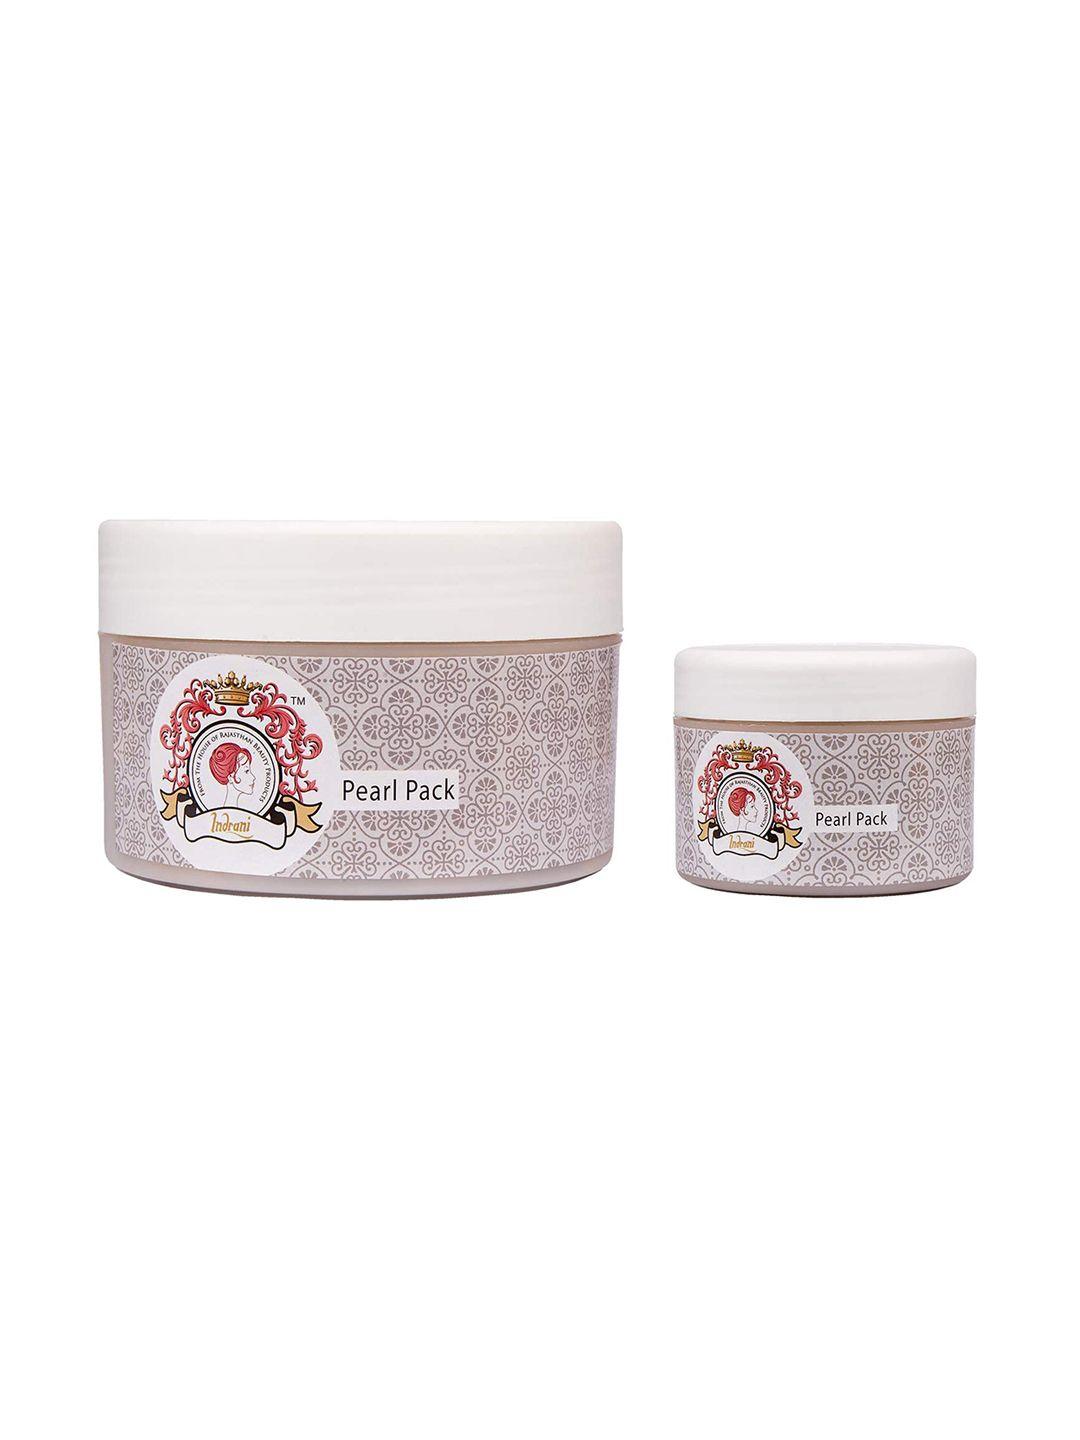 indrani cosmetics skin rejuvenating pearl pack with pearl powder - 300 g